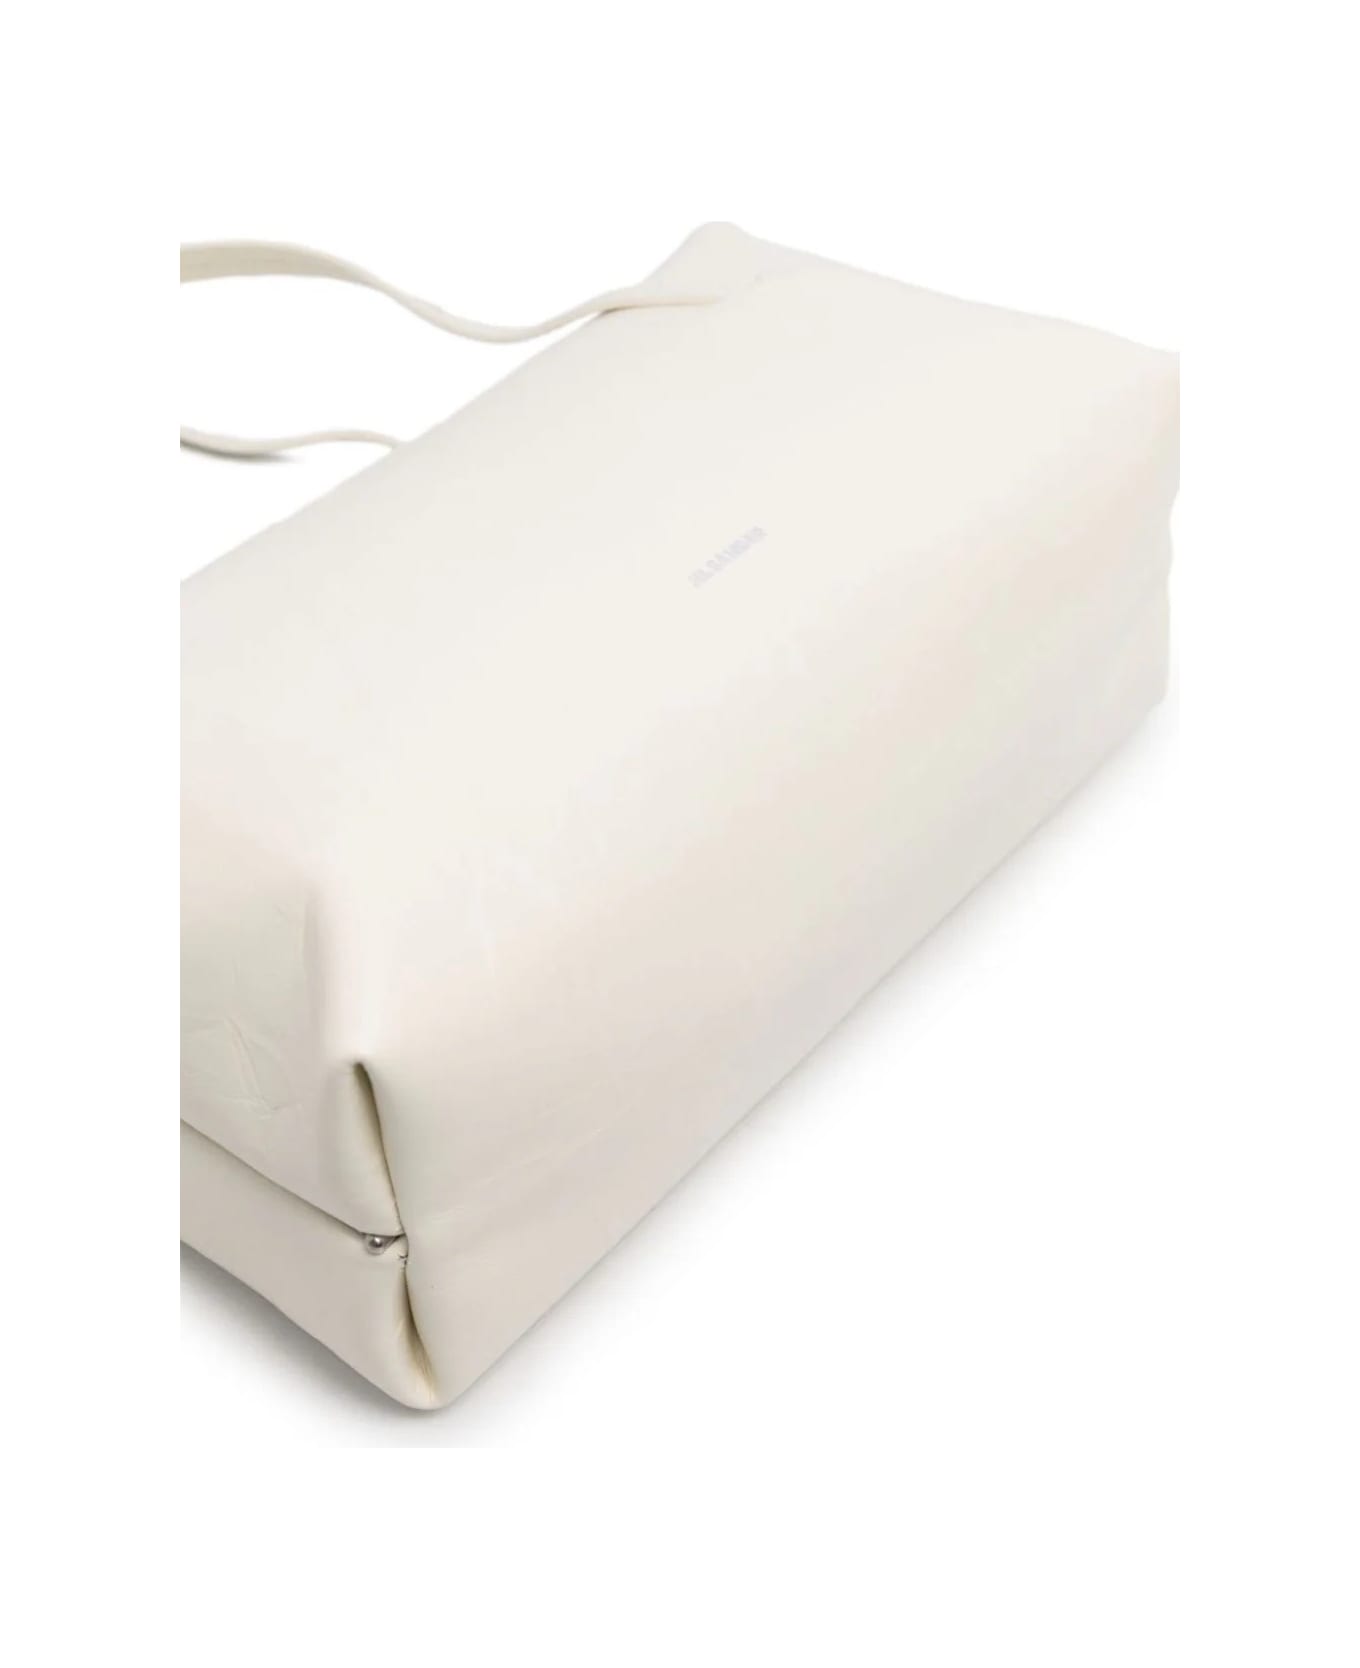 Jil Sander Goji Pillow Bag In White Leather - White